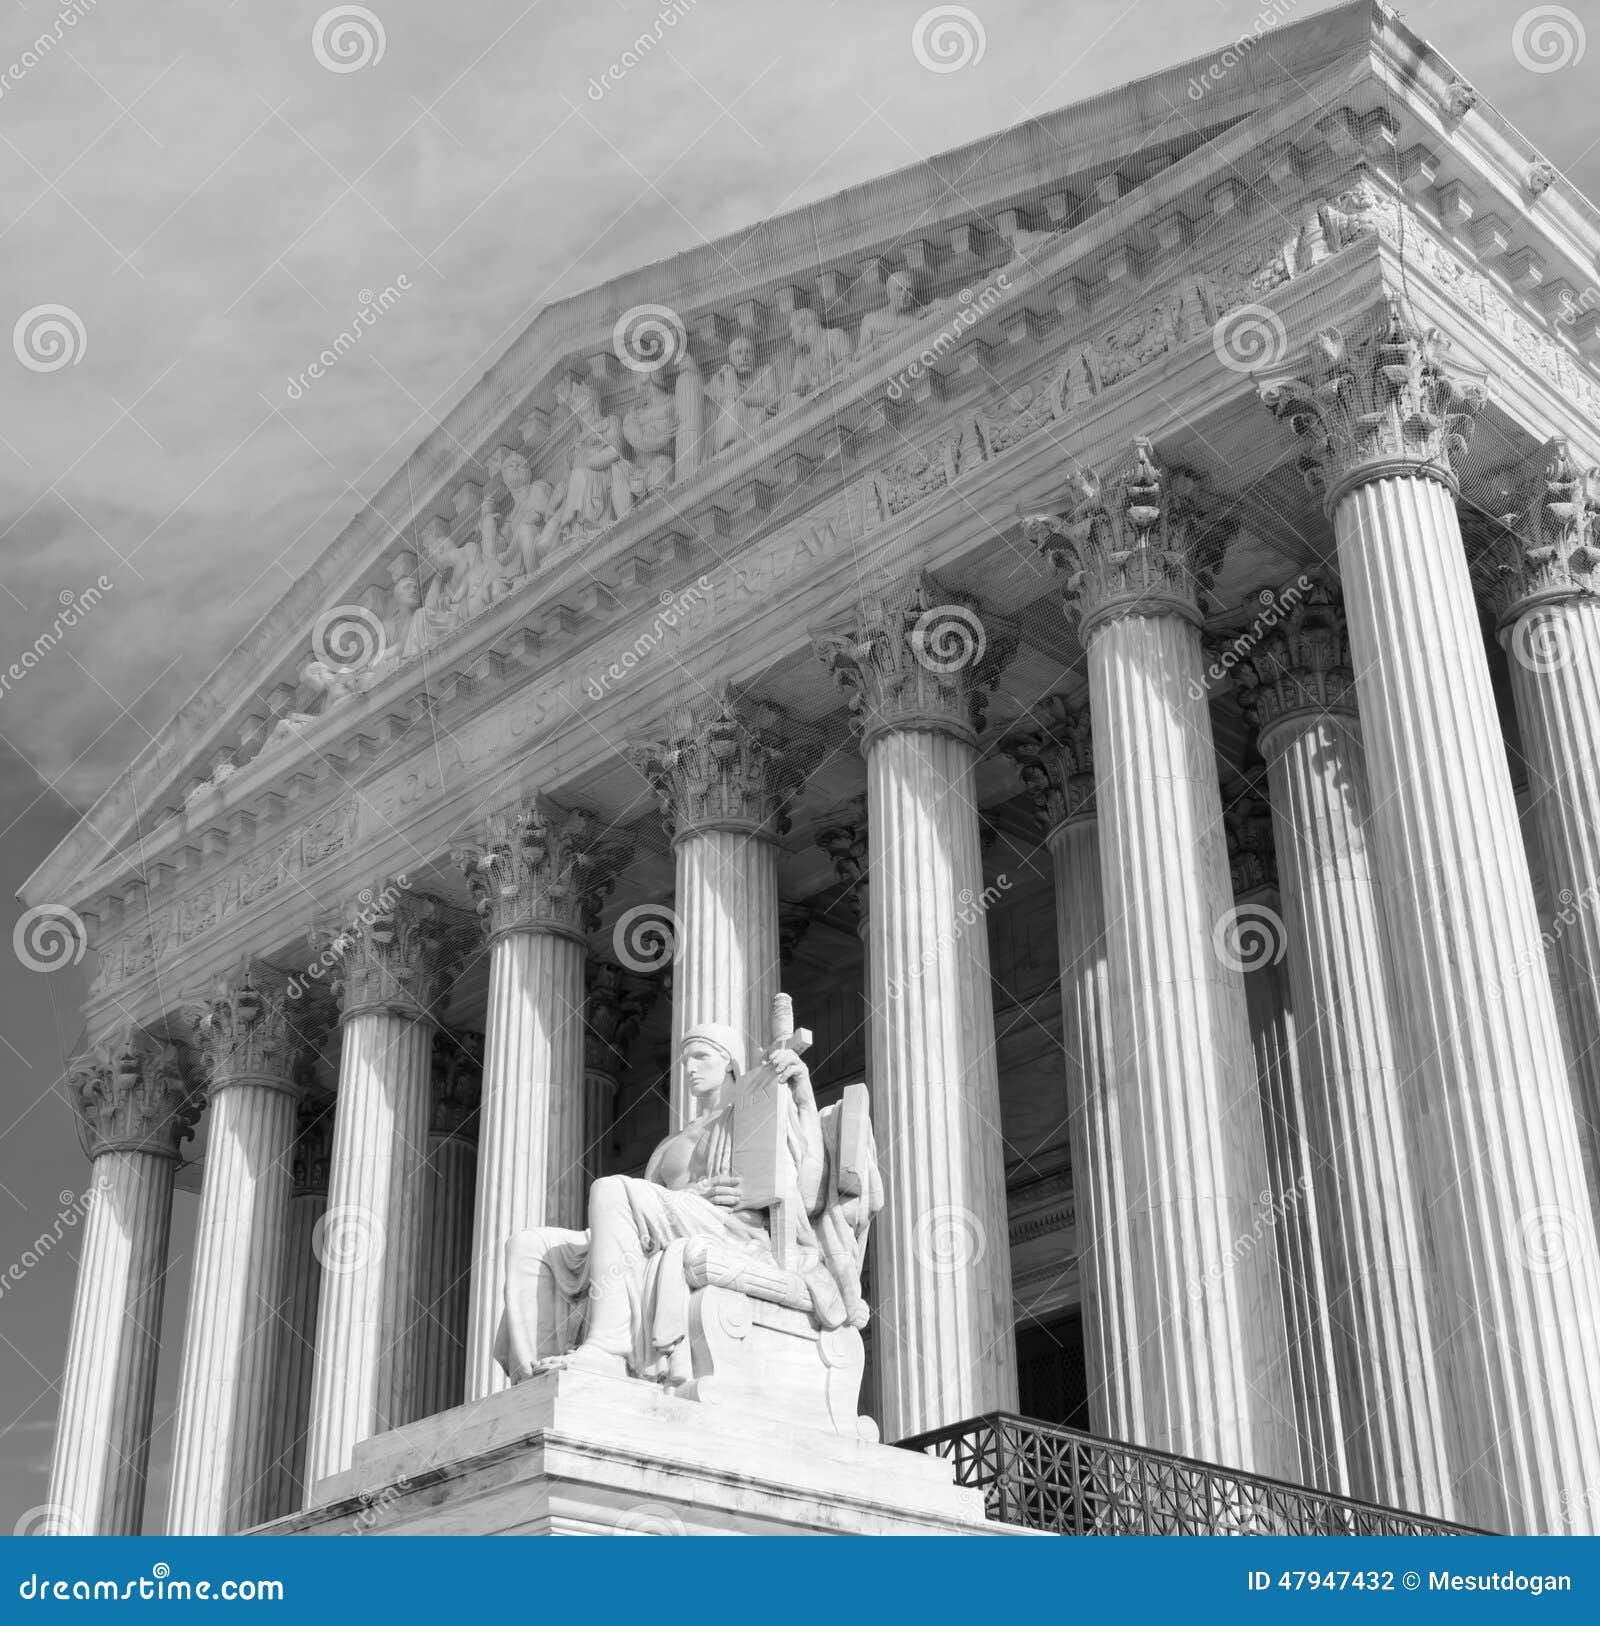 united states supreme court, washington dc